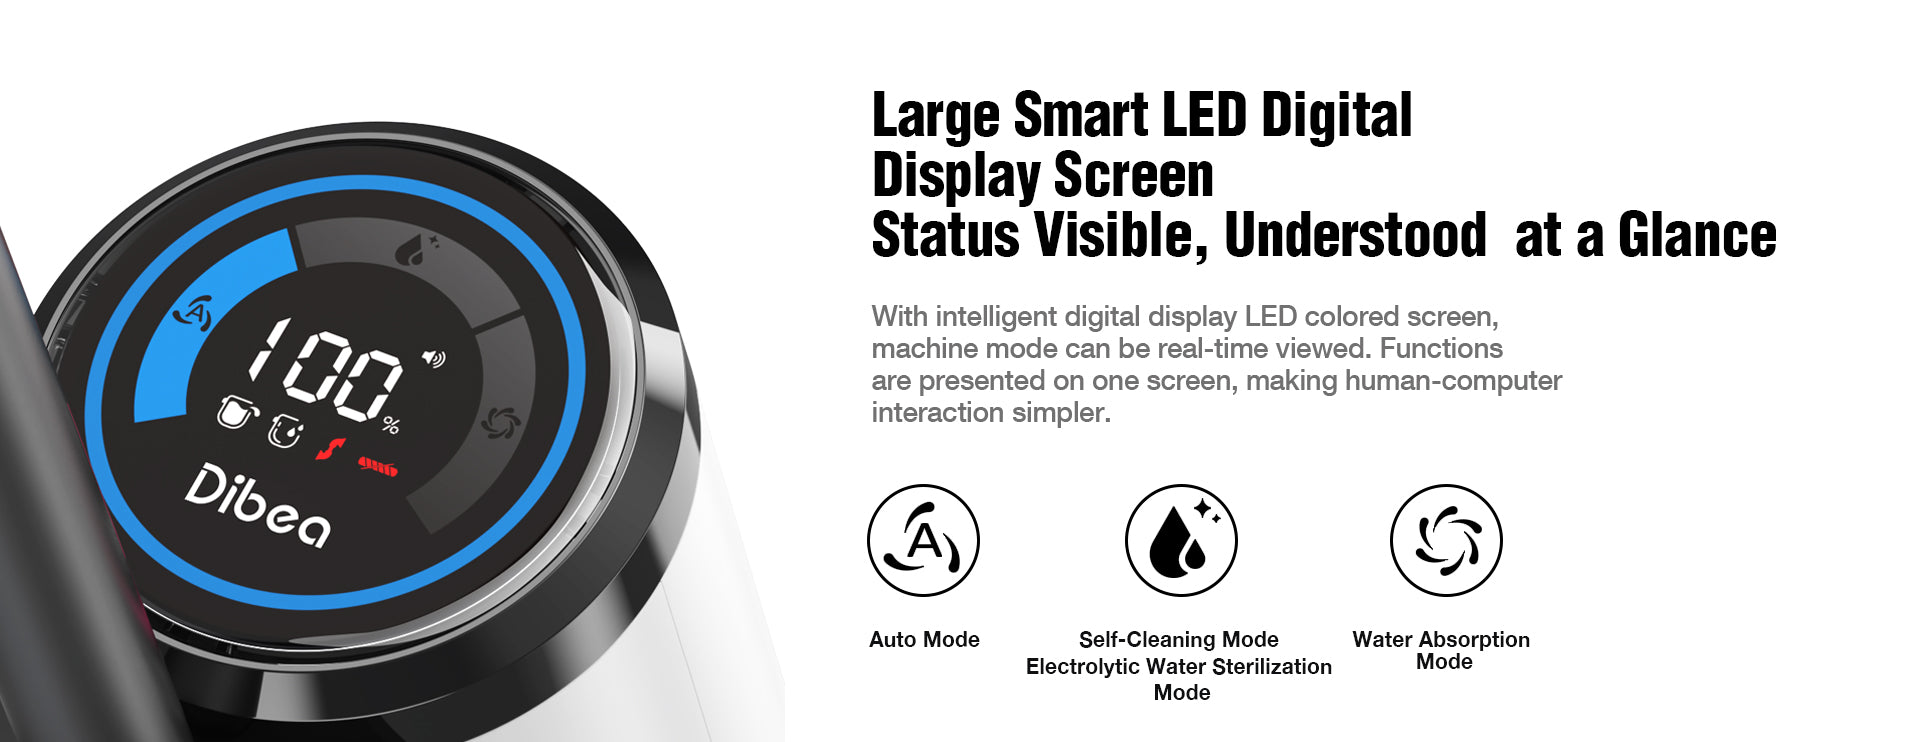 Large_Smart_LED_DigitalDisplay_ScreenStatus_Visible_Understood_at_a_Glance